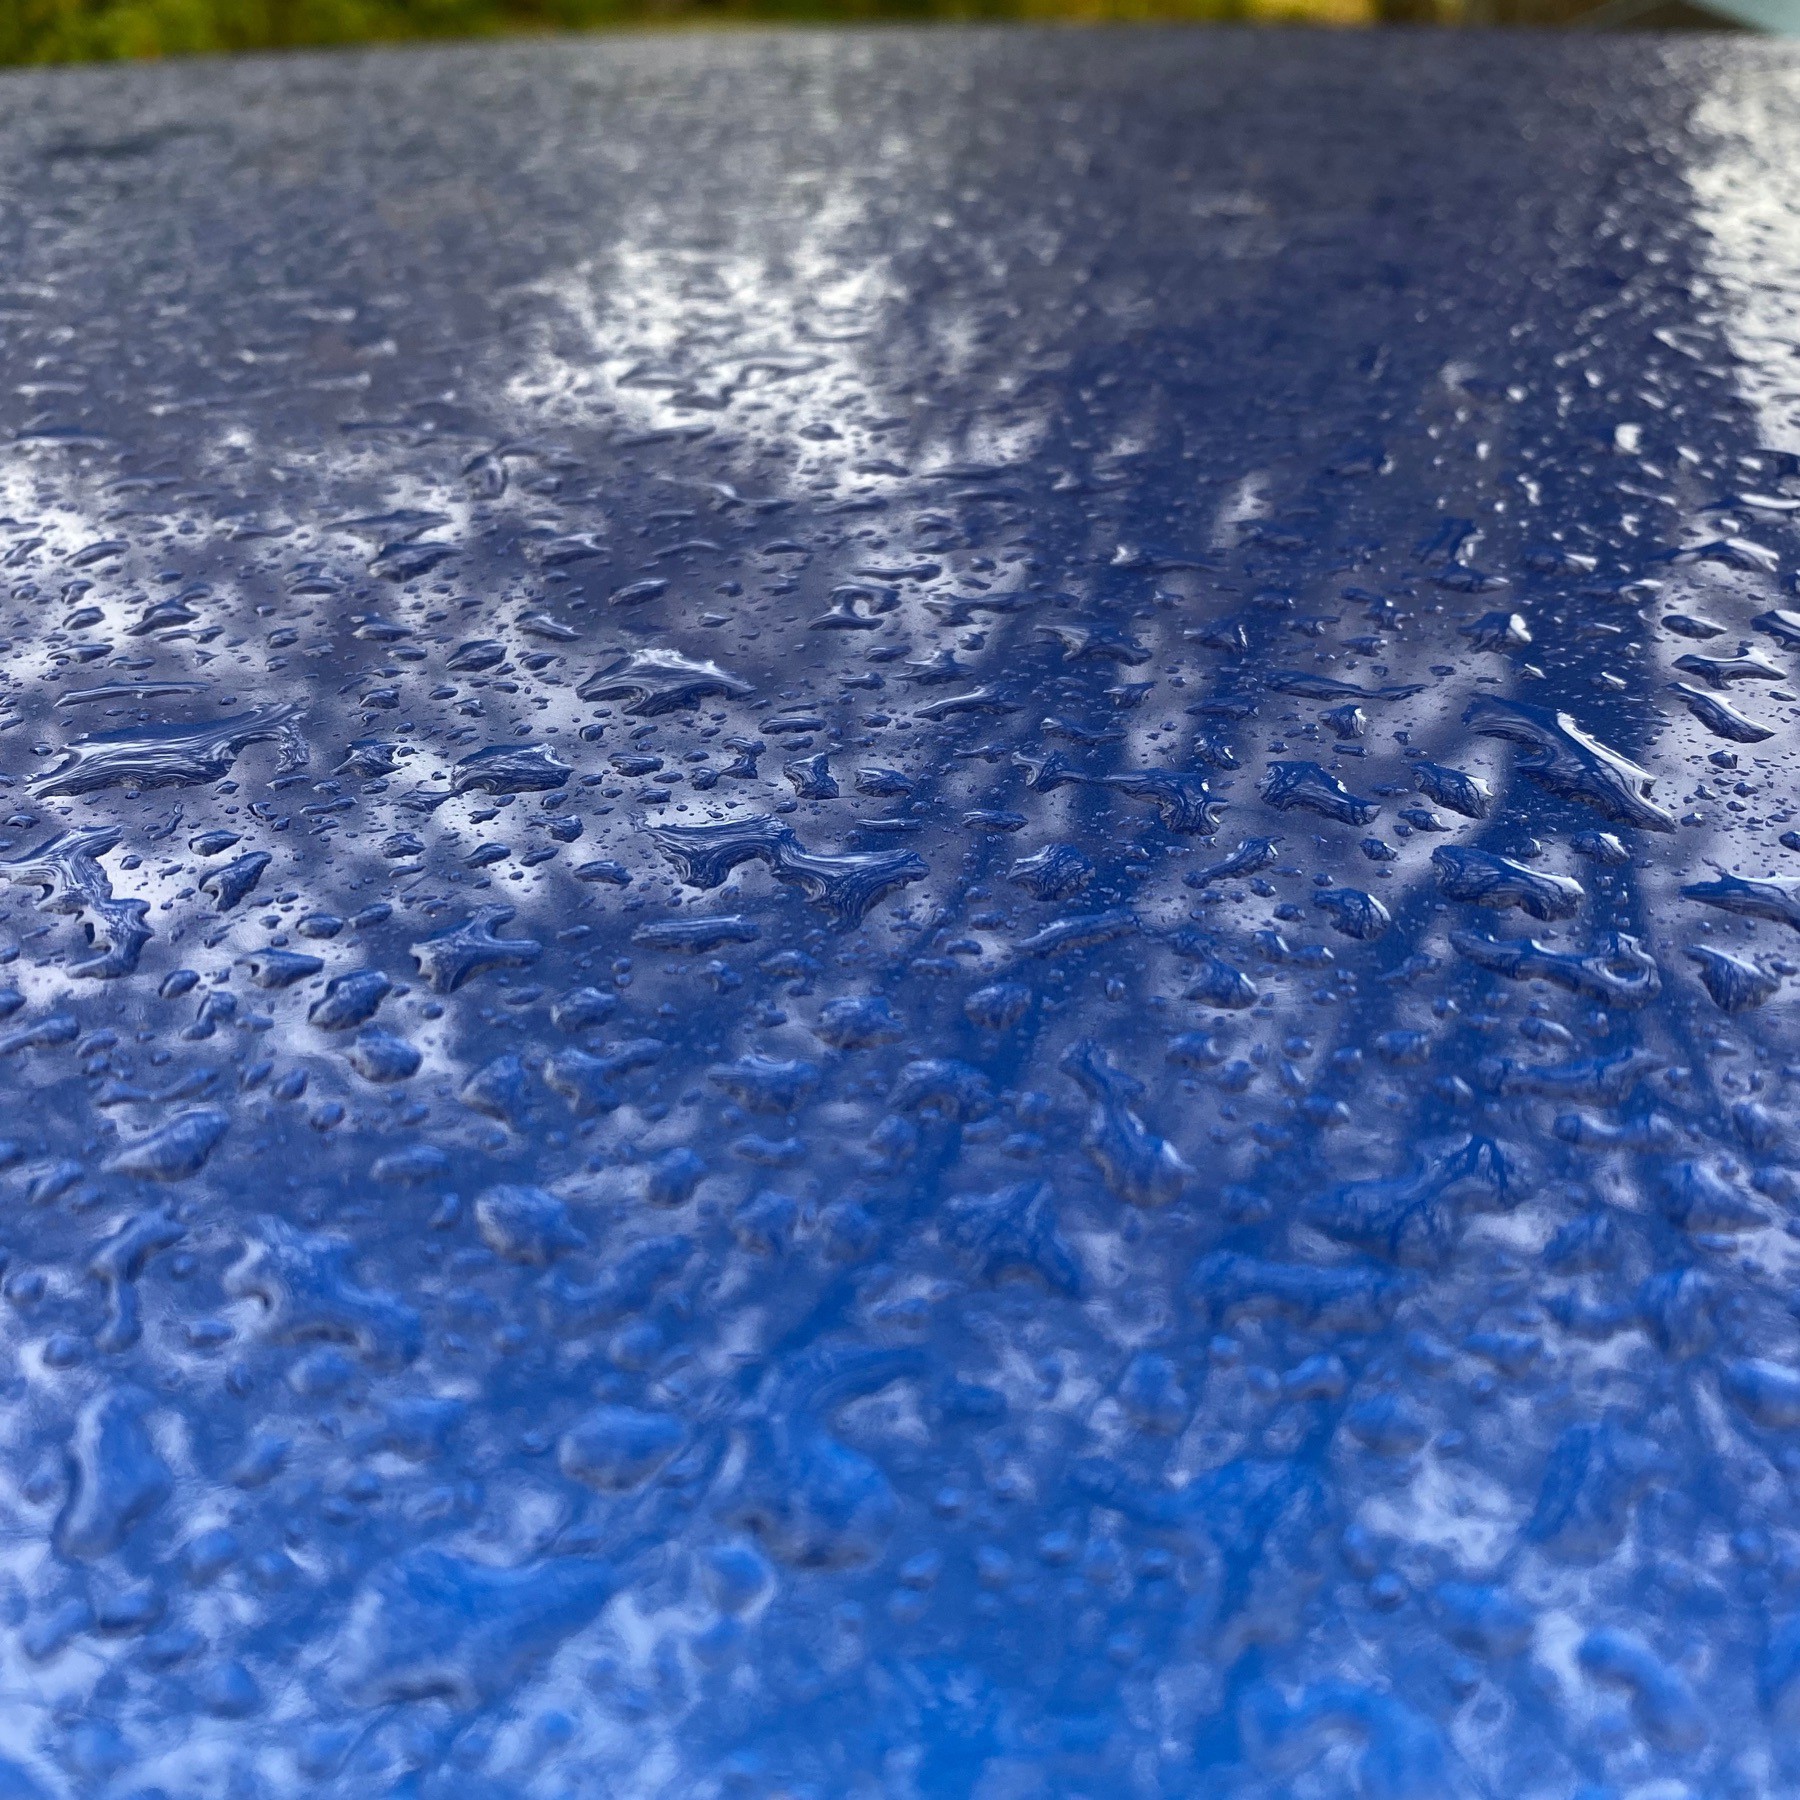 rain on car roof